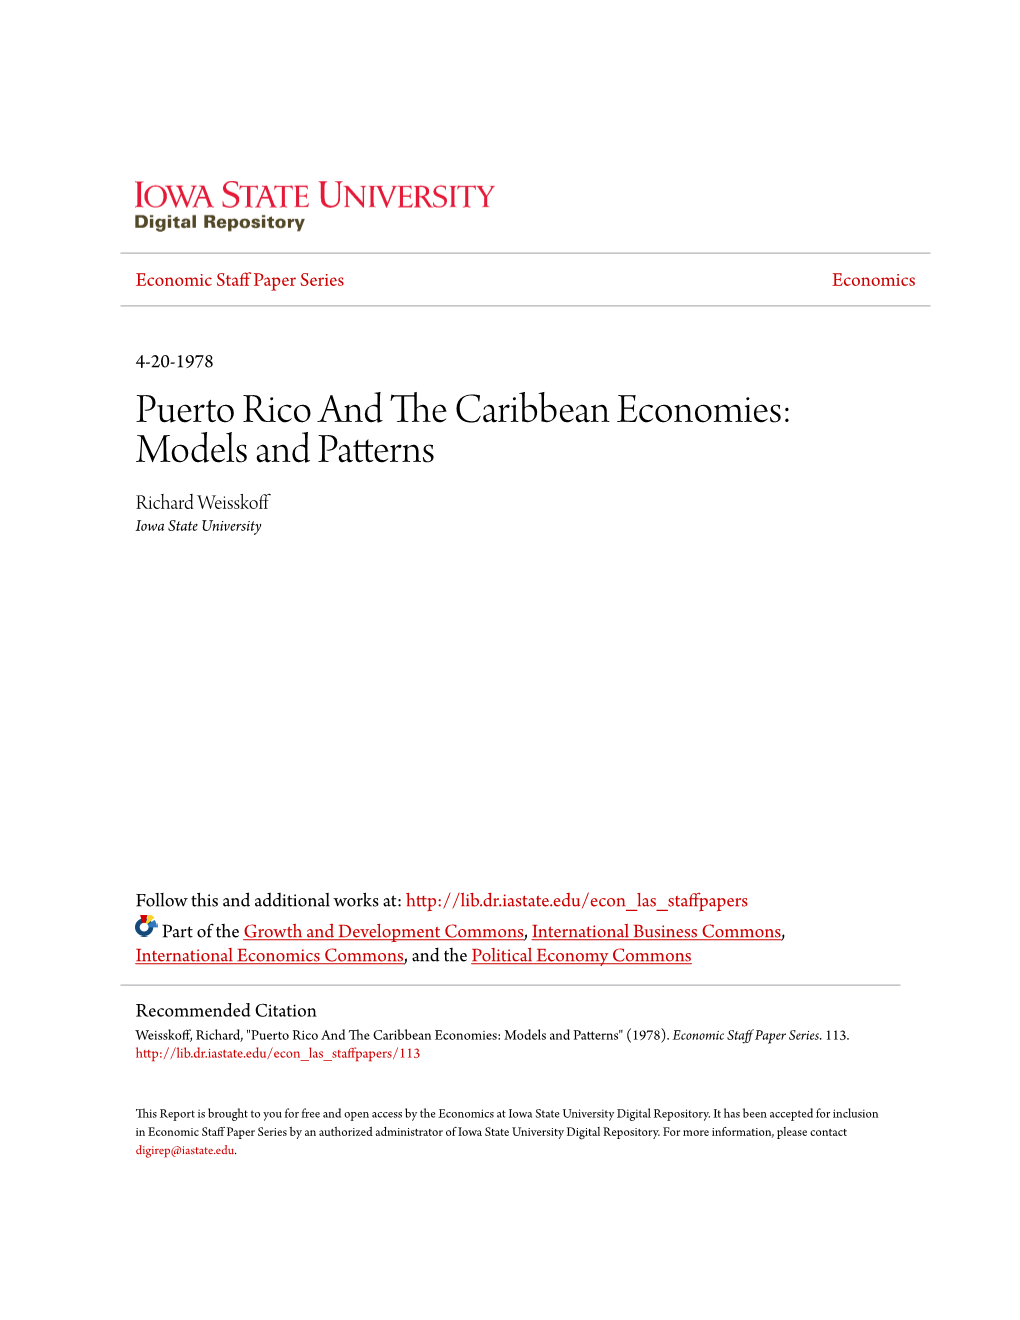 Puerto Rico and the Caribbean Economies